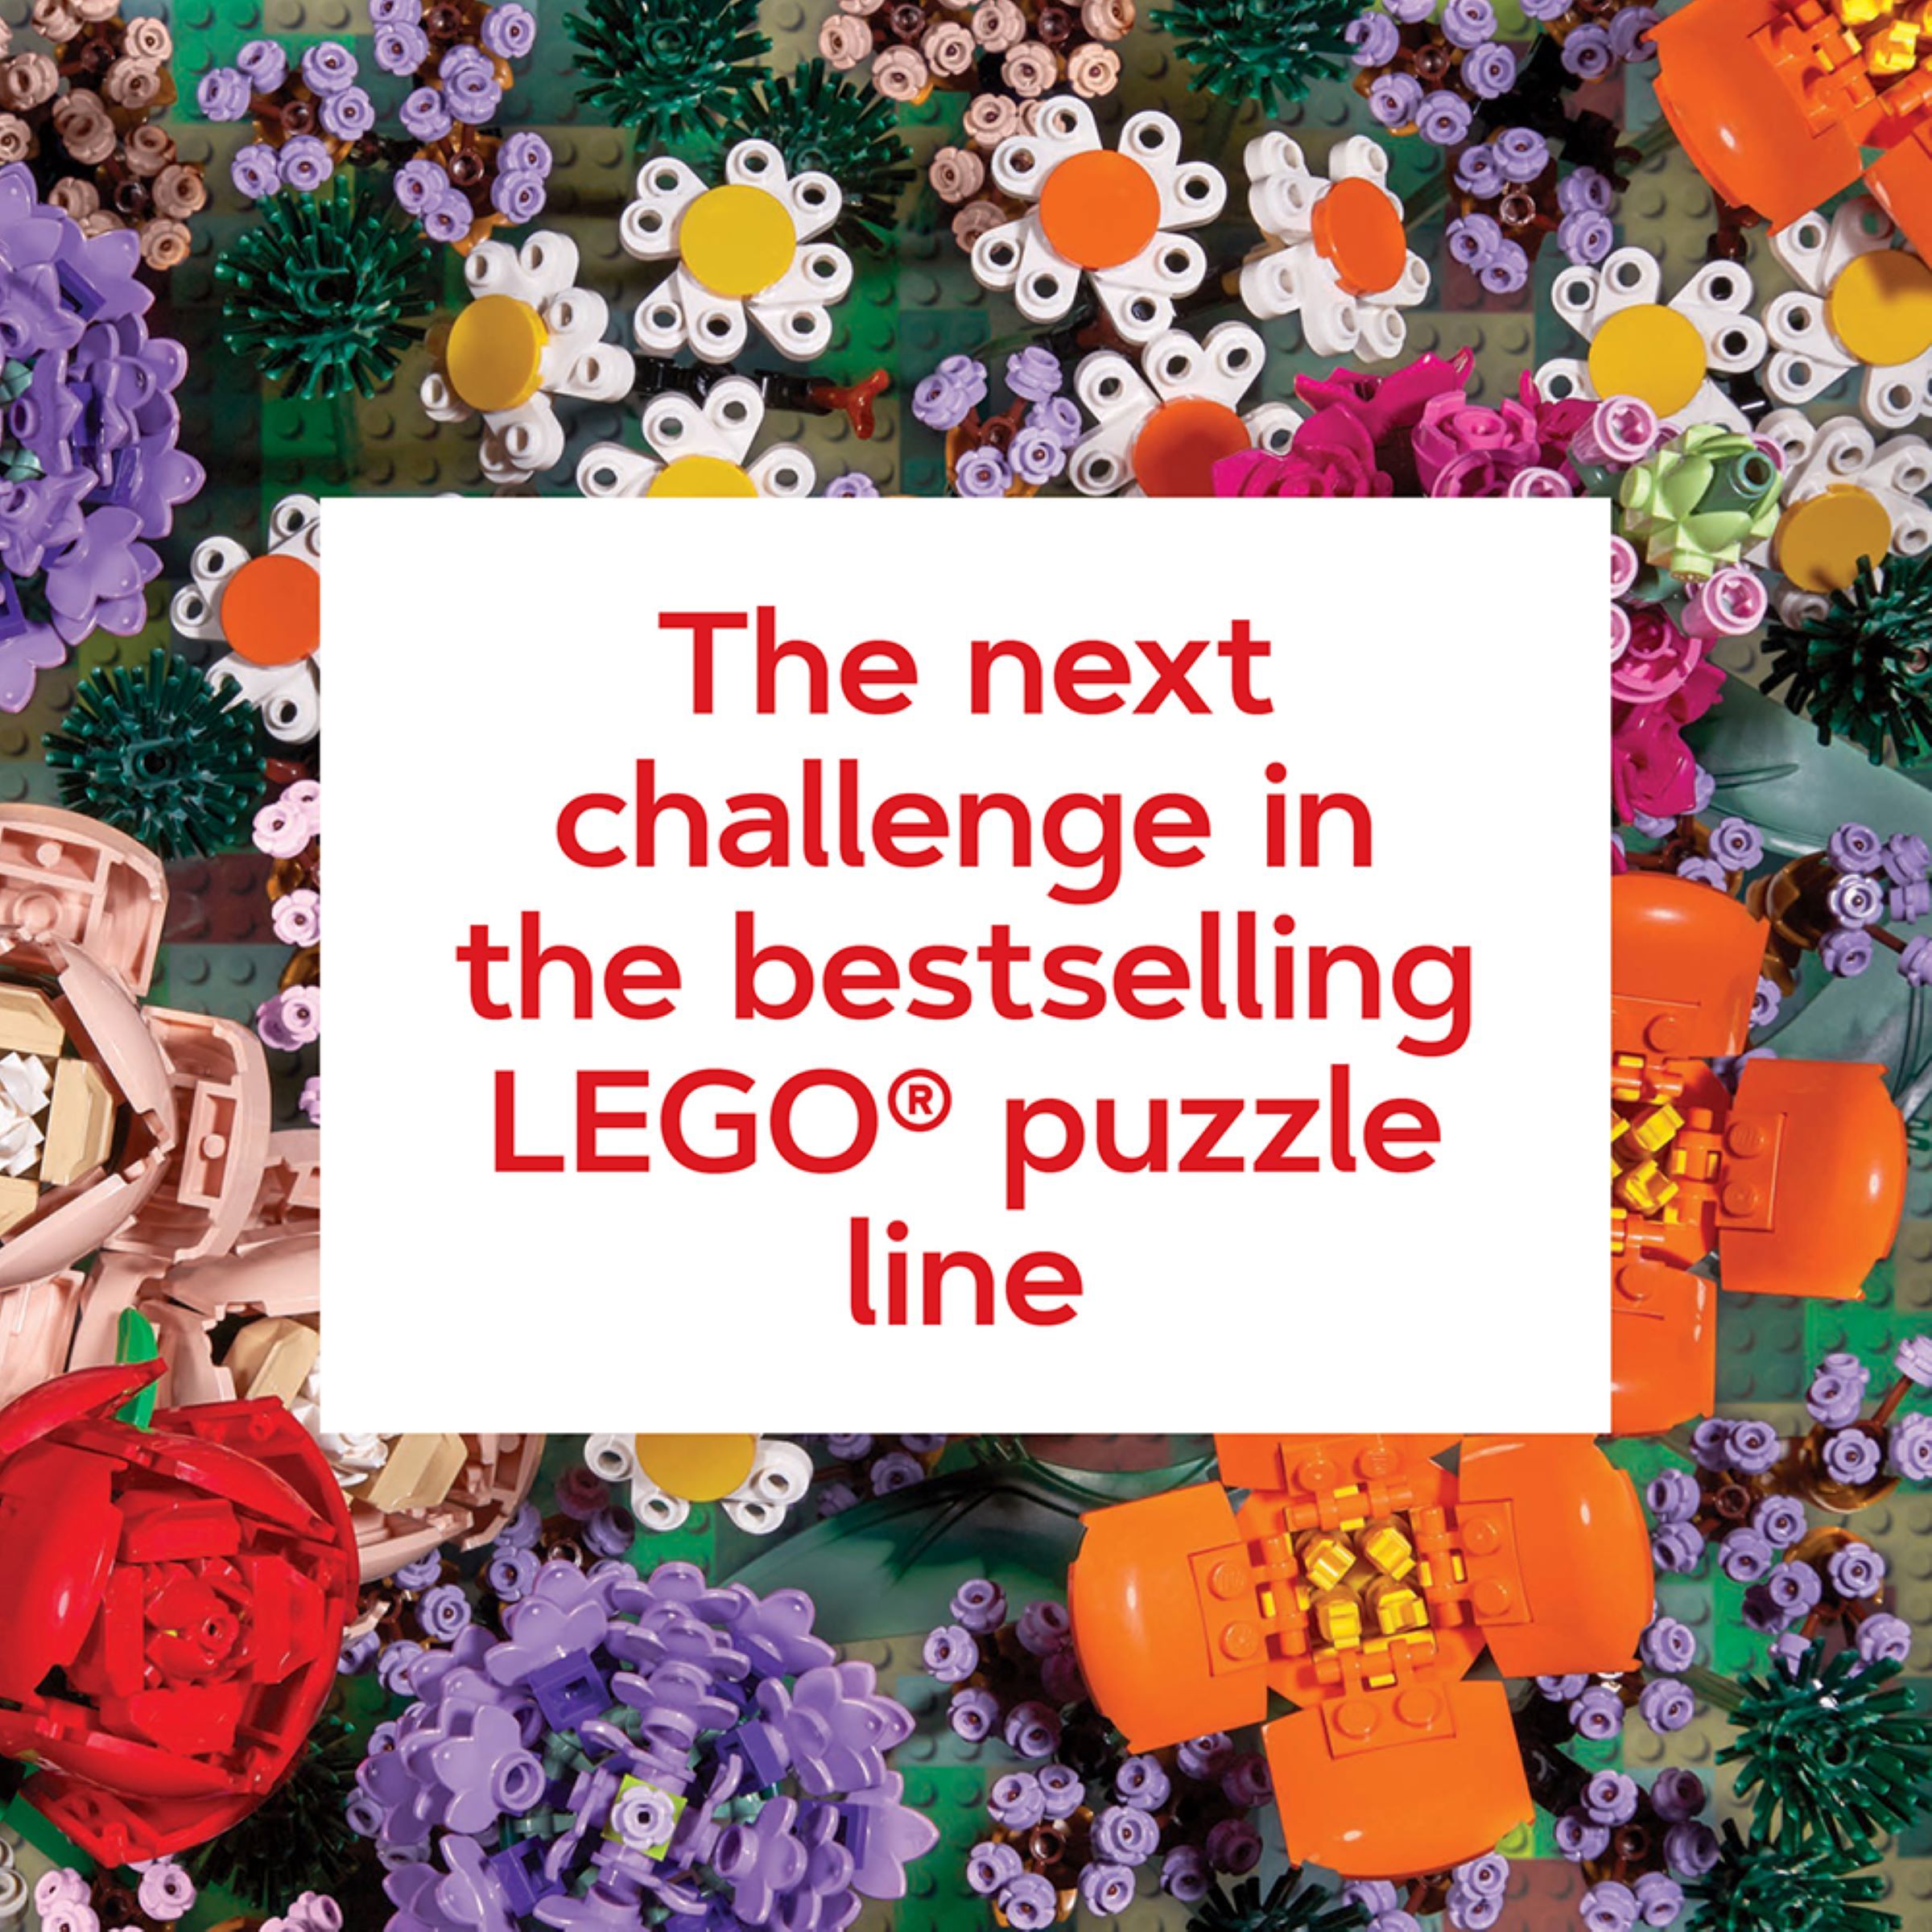 LEGO Gear 5007851 Brick Botanicals 1,000-Piece Puzzle LEGO_5007851_alt2.jpg